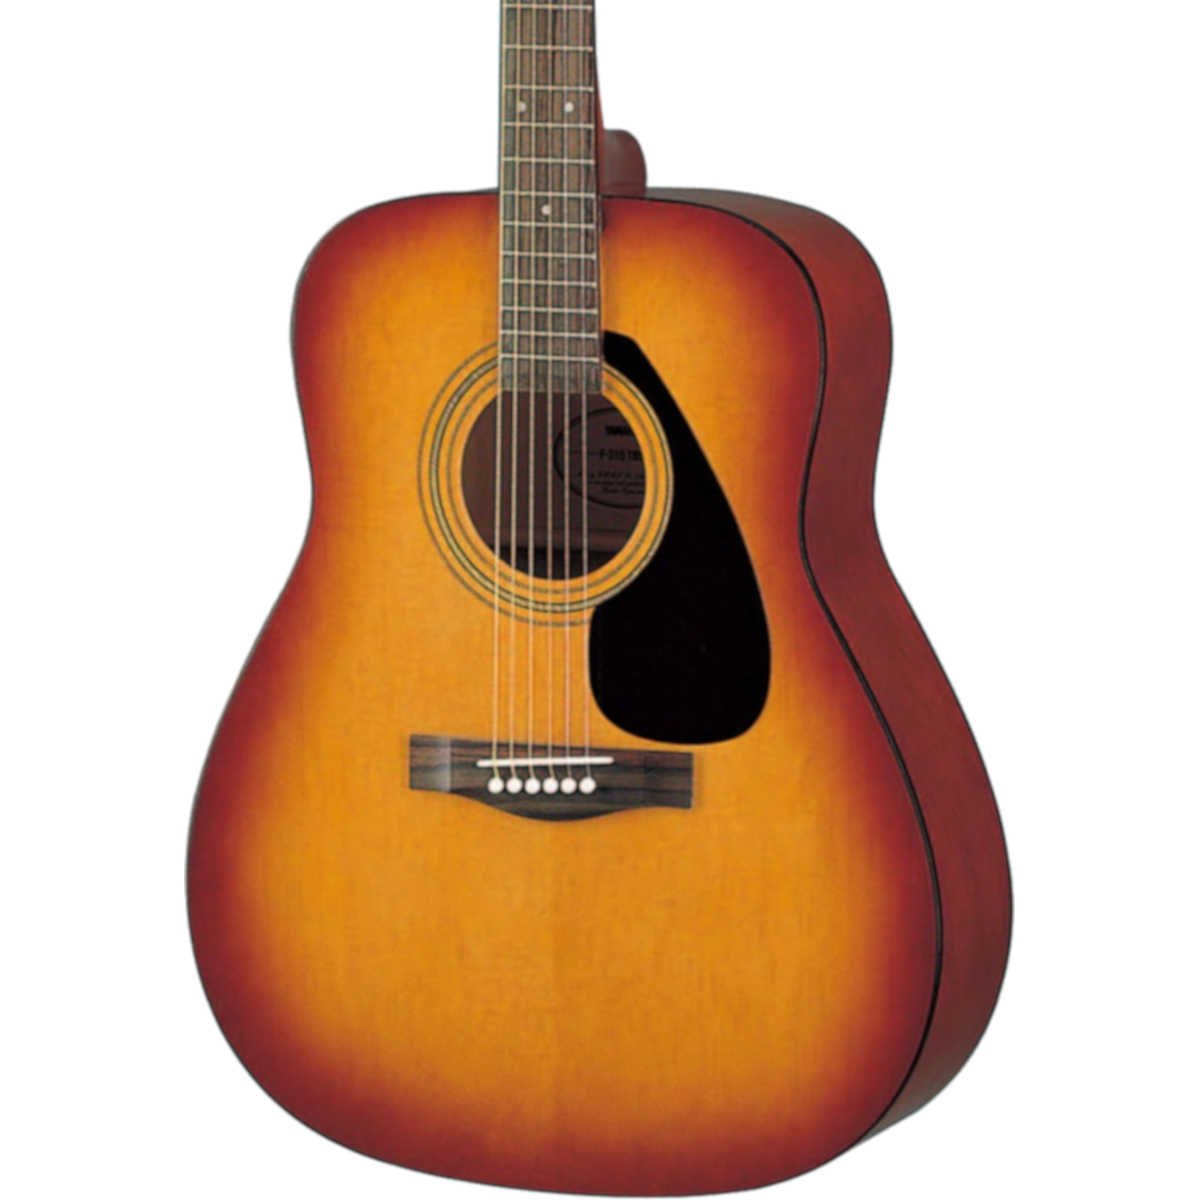 Yamaha F310P Folk Guitar - Tobacco Brown Sunburst - Western guitar